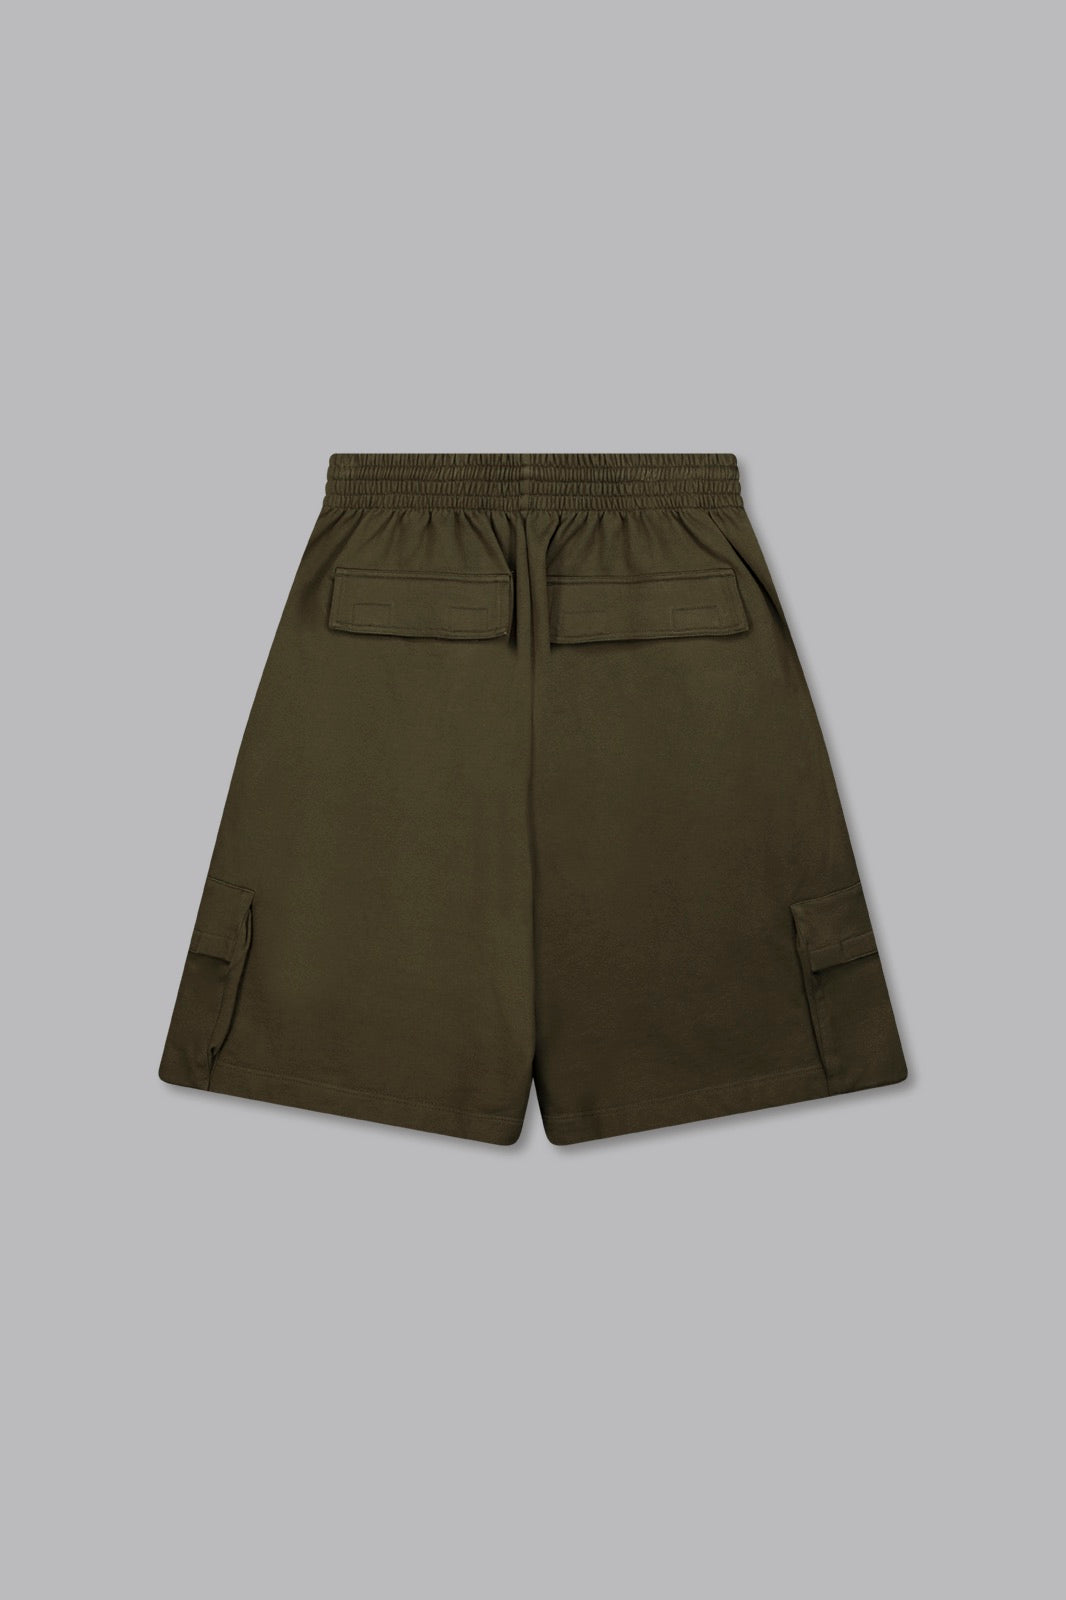 Cargo Shorts - Khaki